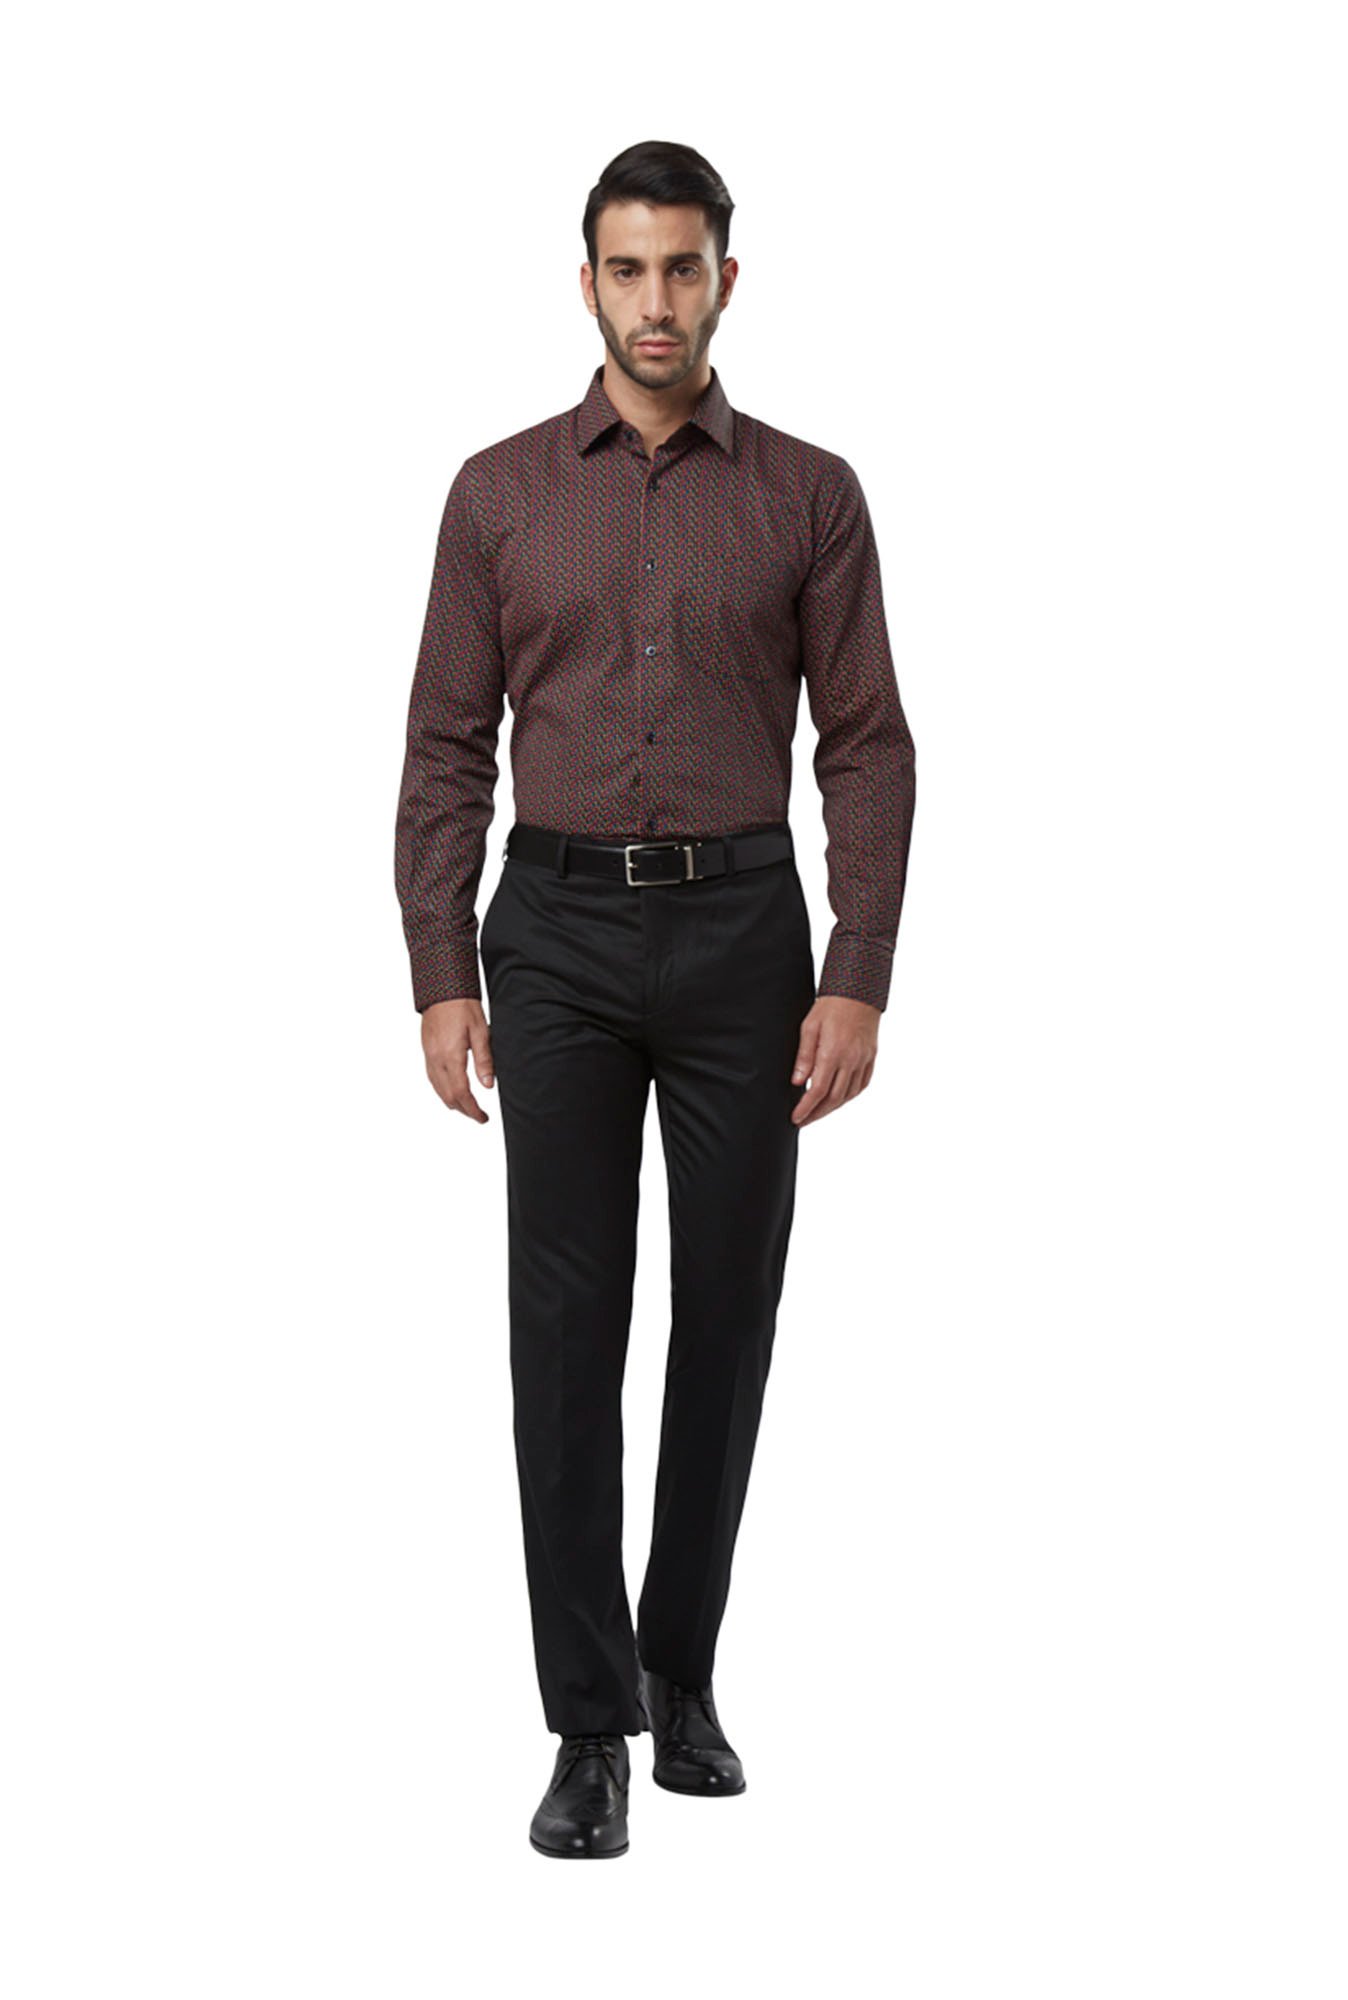 Raymond Grey Self Design Formal Trouser 7461113htm  Buy Raymond Grey Self  Design Formal Trouser 7461113htm online in India